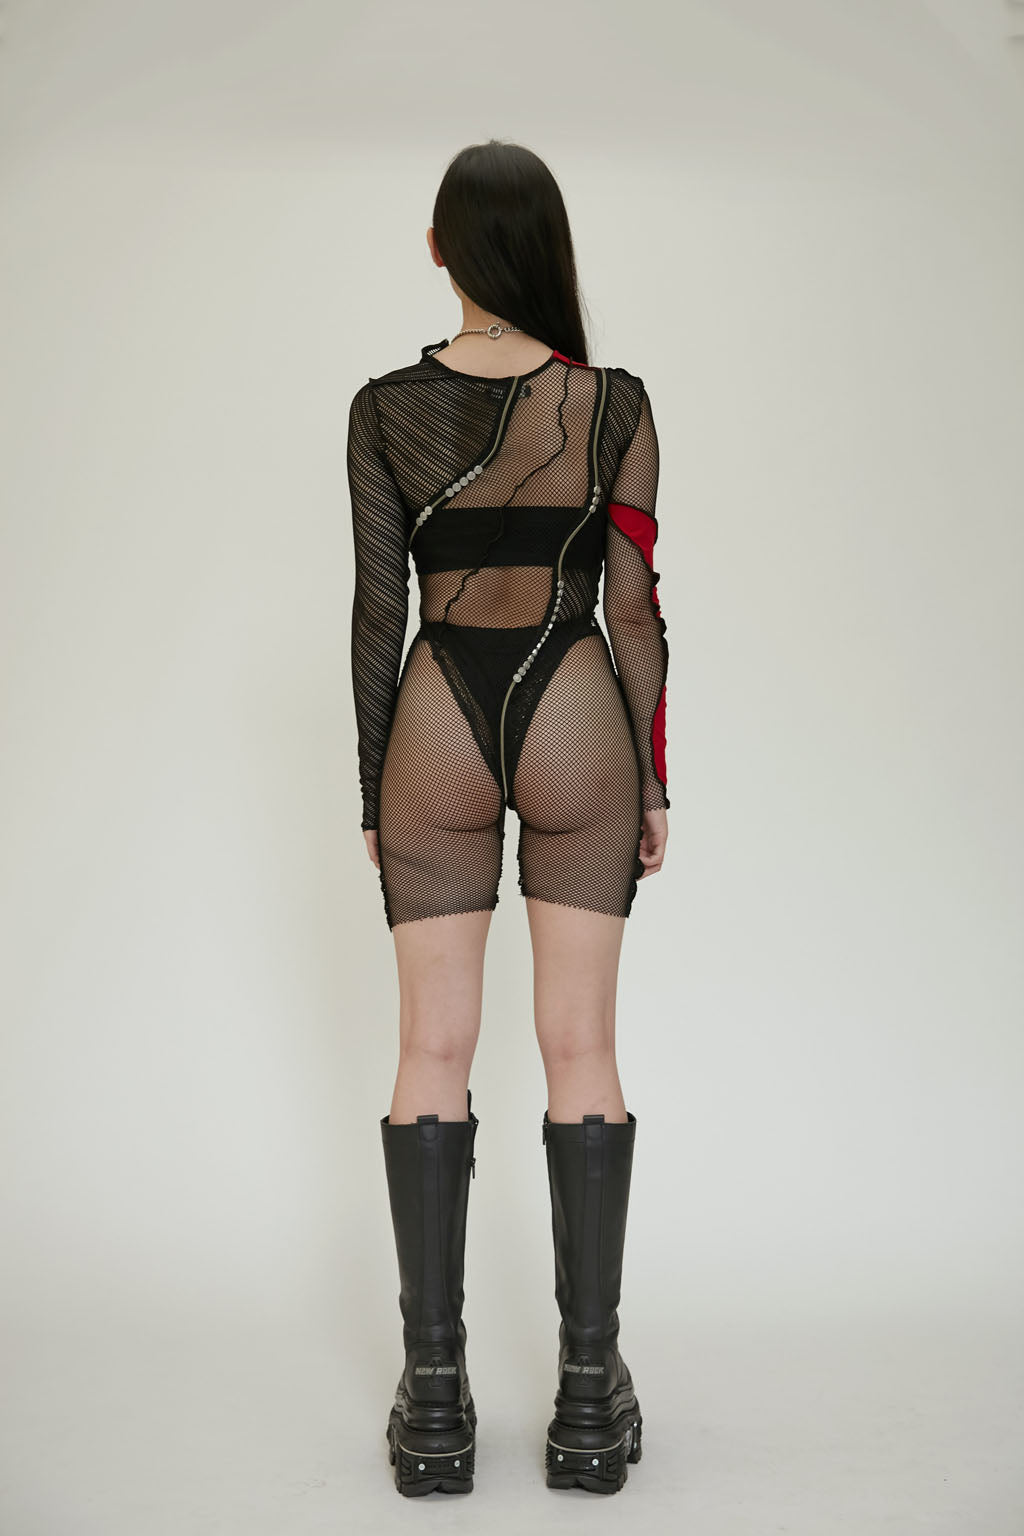 JENN LEE - Net Bodysuit, buy at DOORS NYC